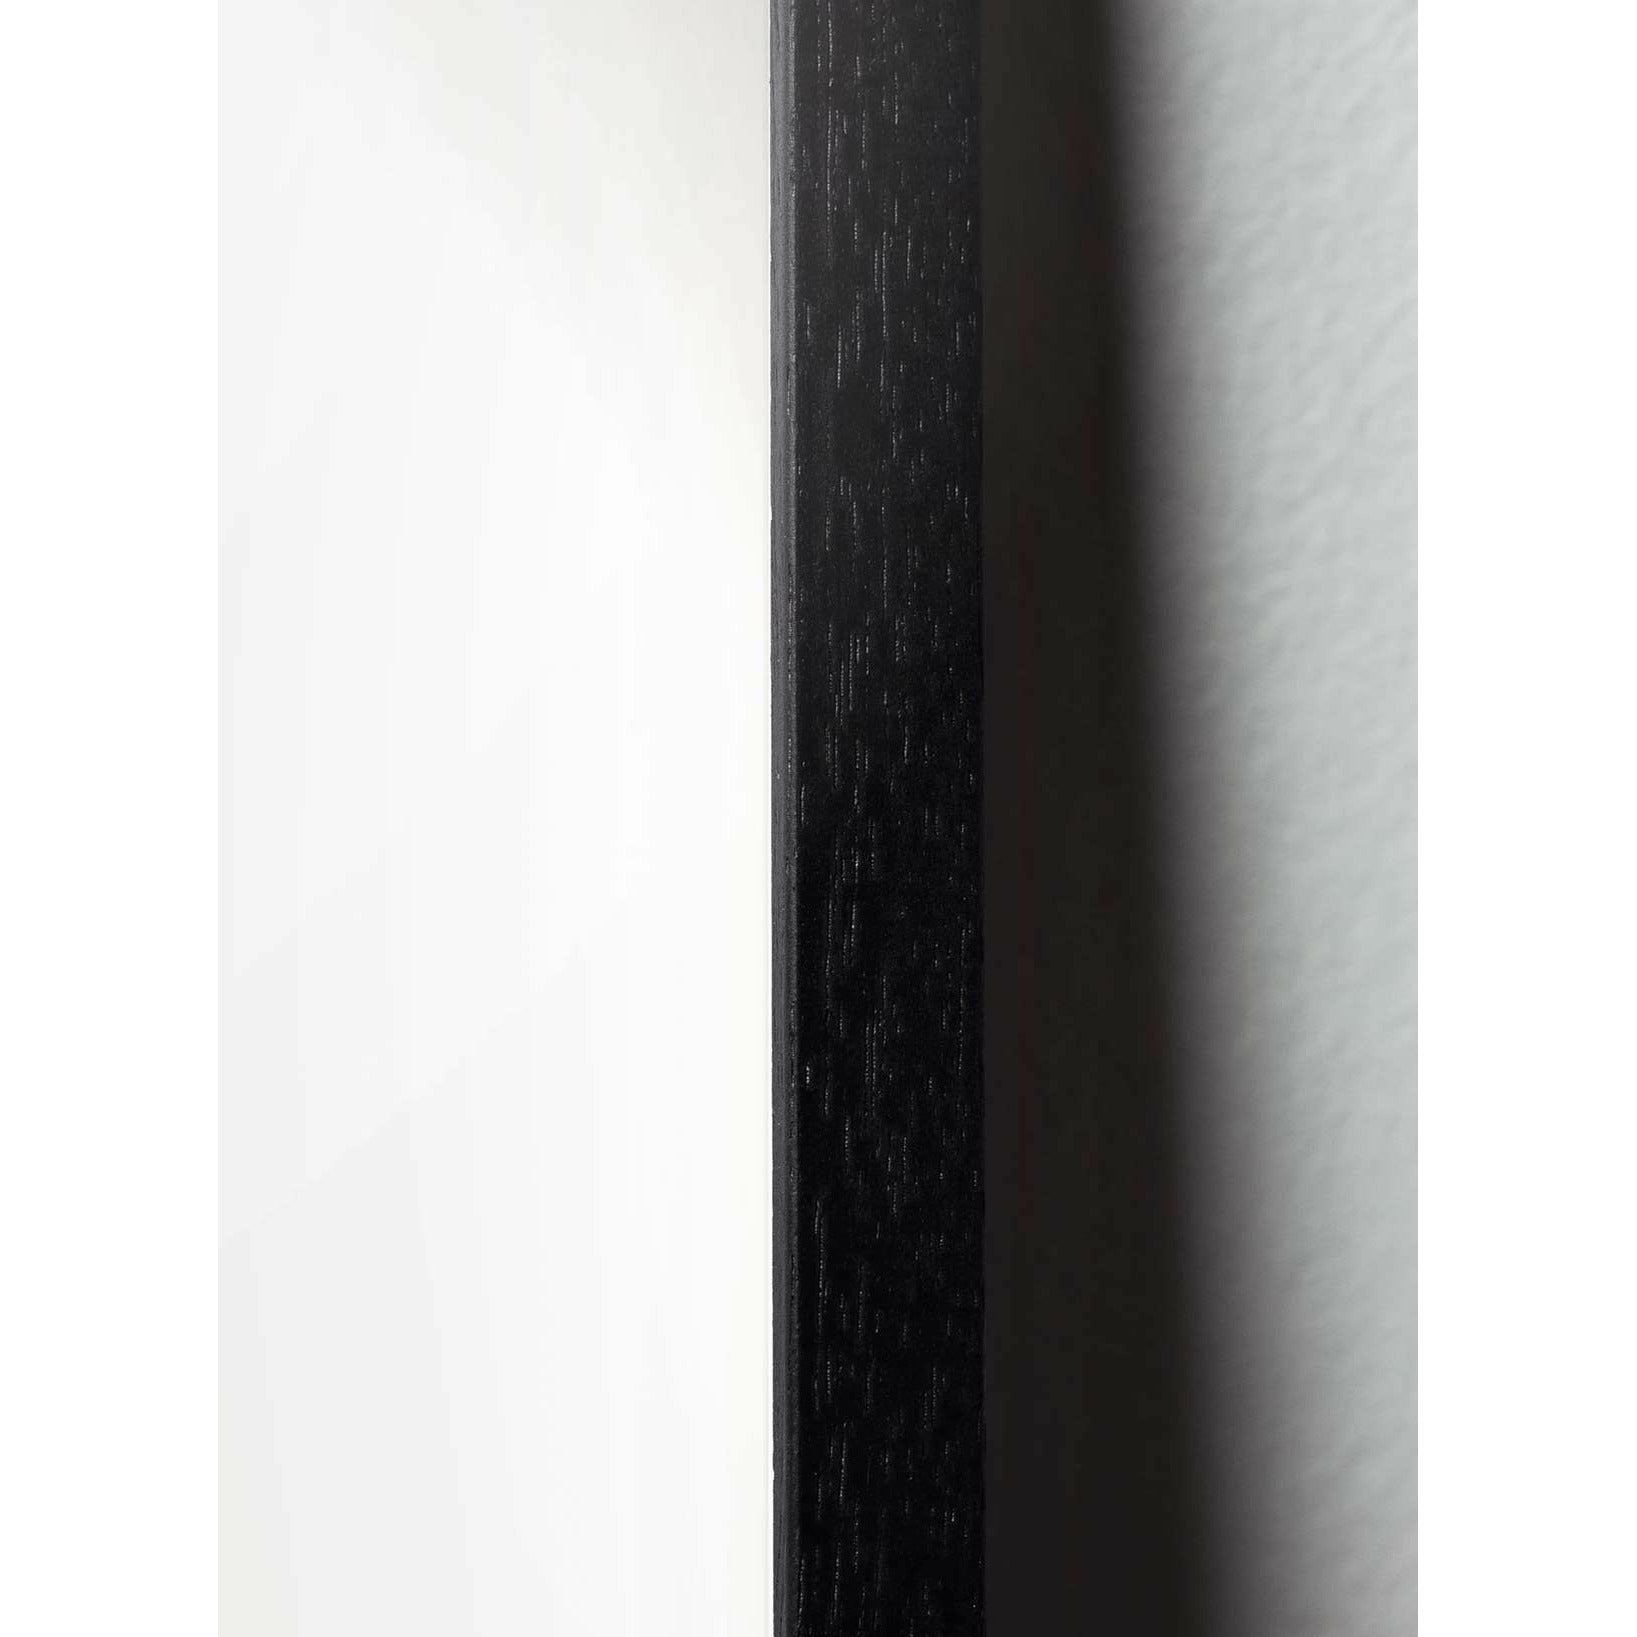 Brainchild Design Icon Poster, Rahmen aus schwarz lackiertem Holz 30x40 cm, Farbe